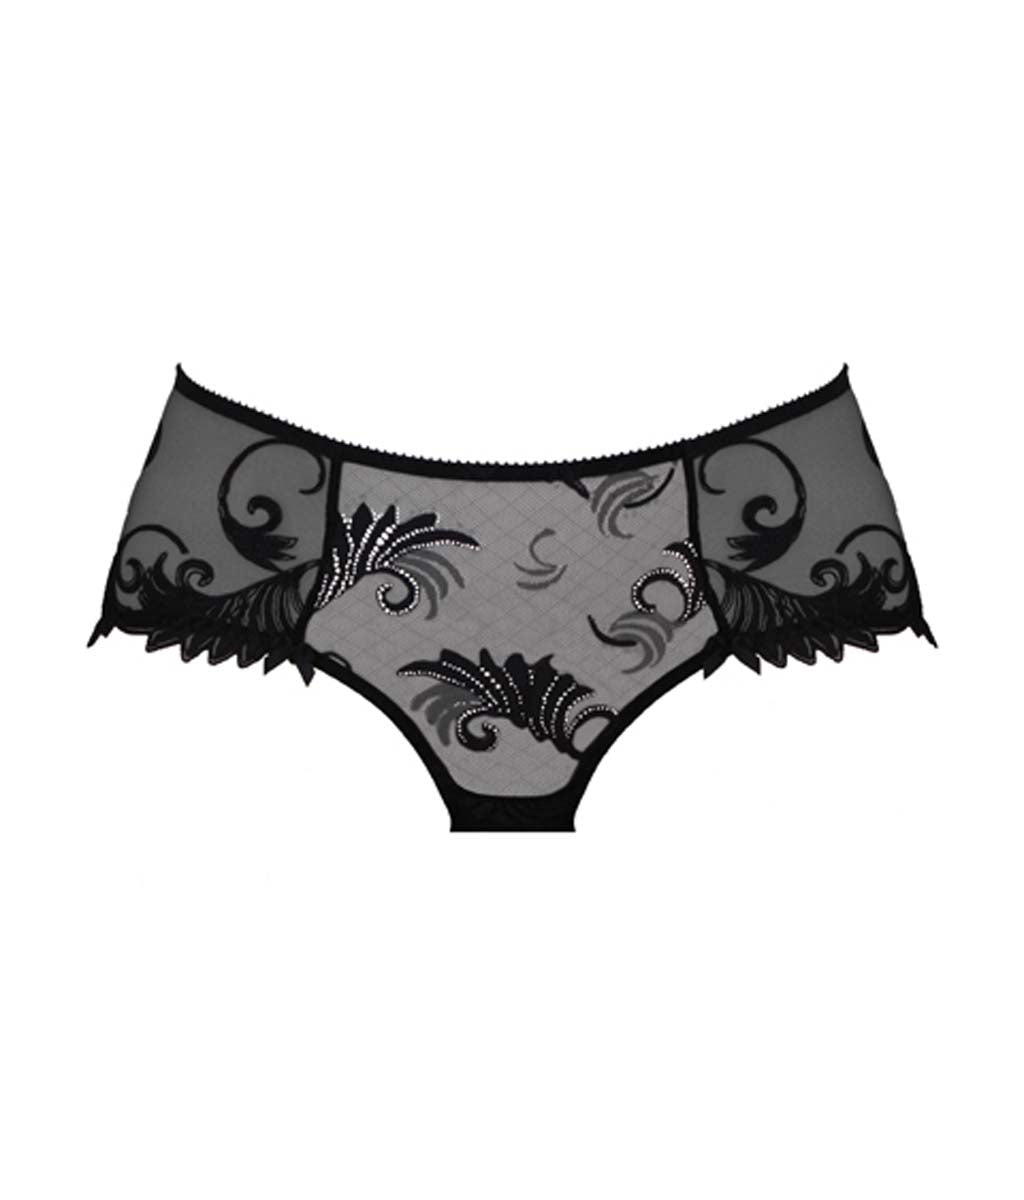 Empreinte 'Thalia' (Black) Shorts (Hotpants) - Sandra Dee - Product Shot - Front